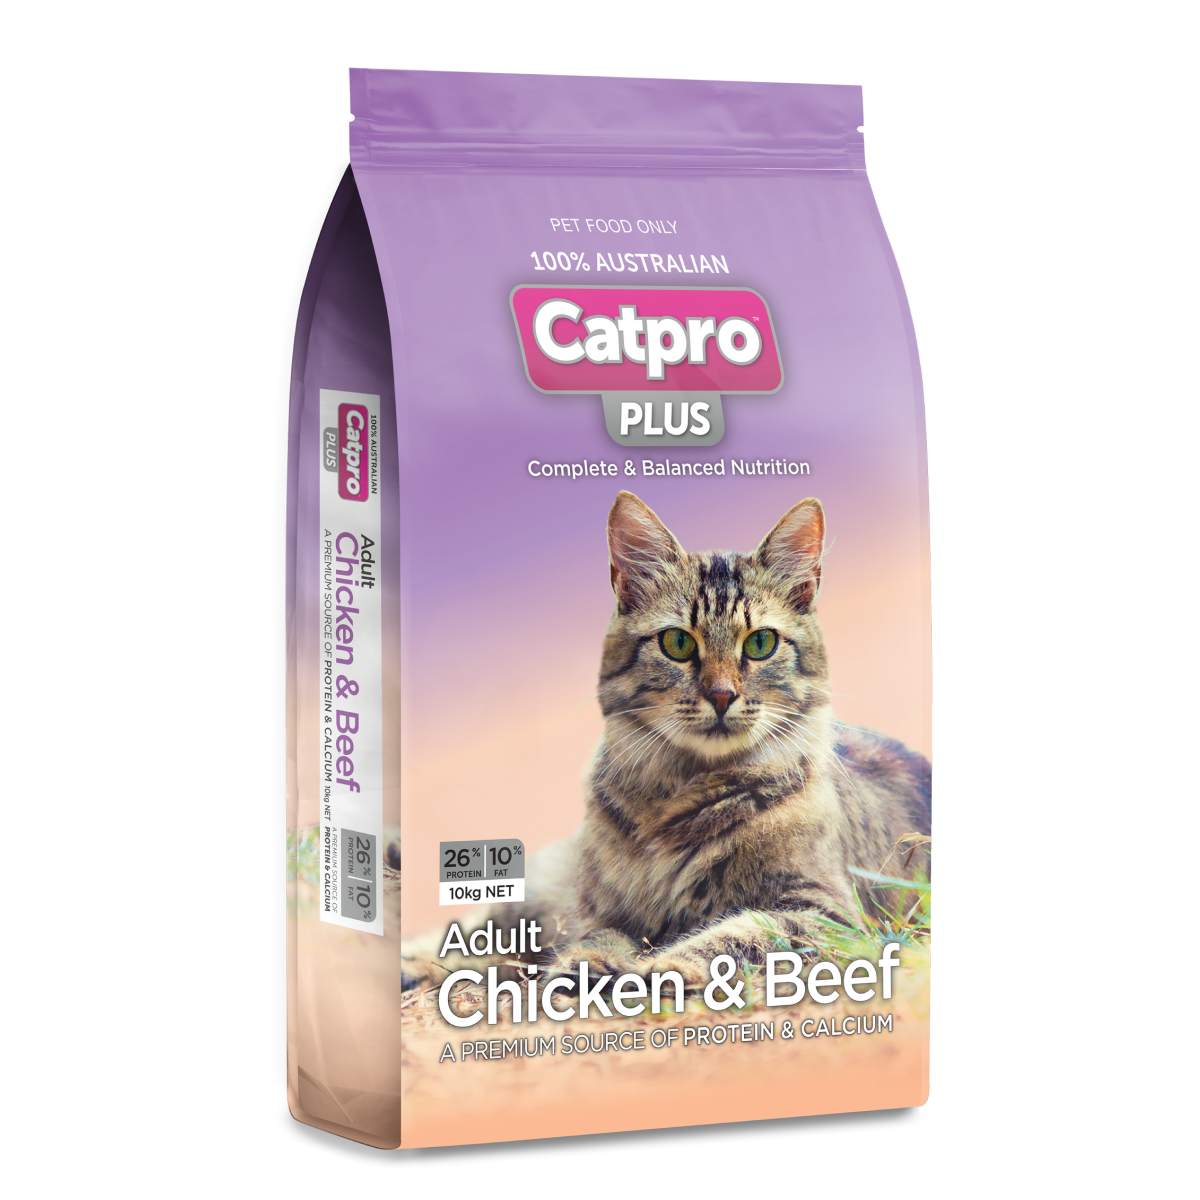 Catpro Chicken & Beef Kibble for Cats